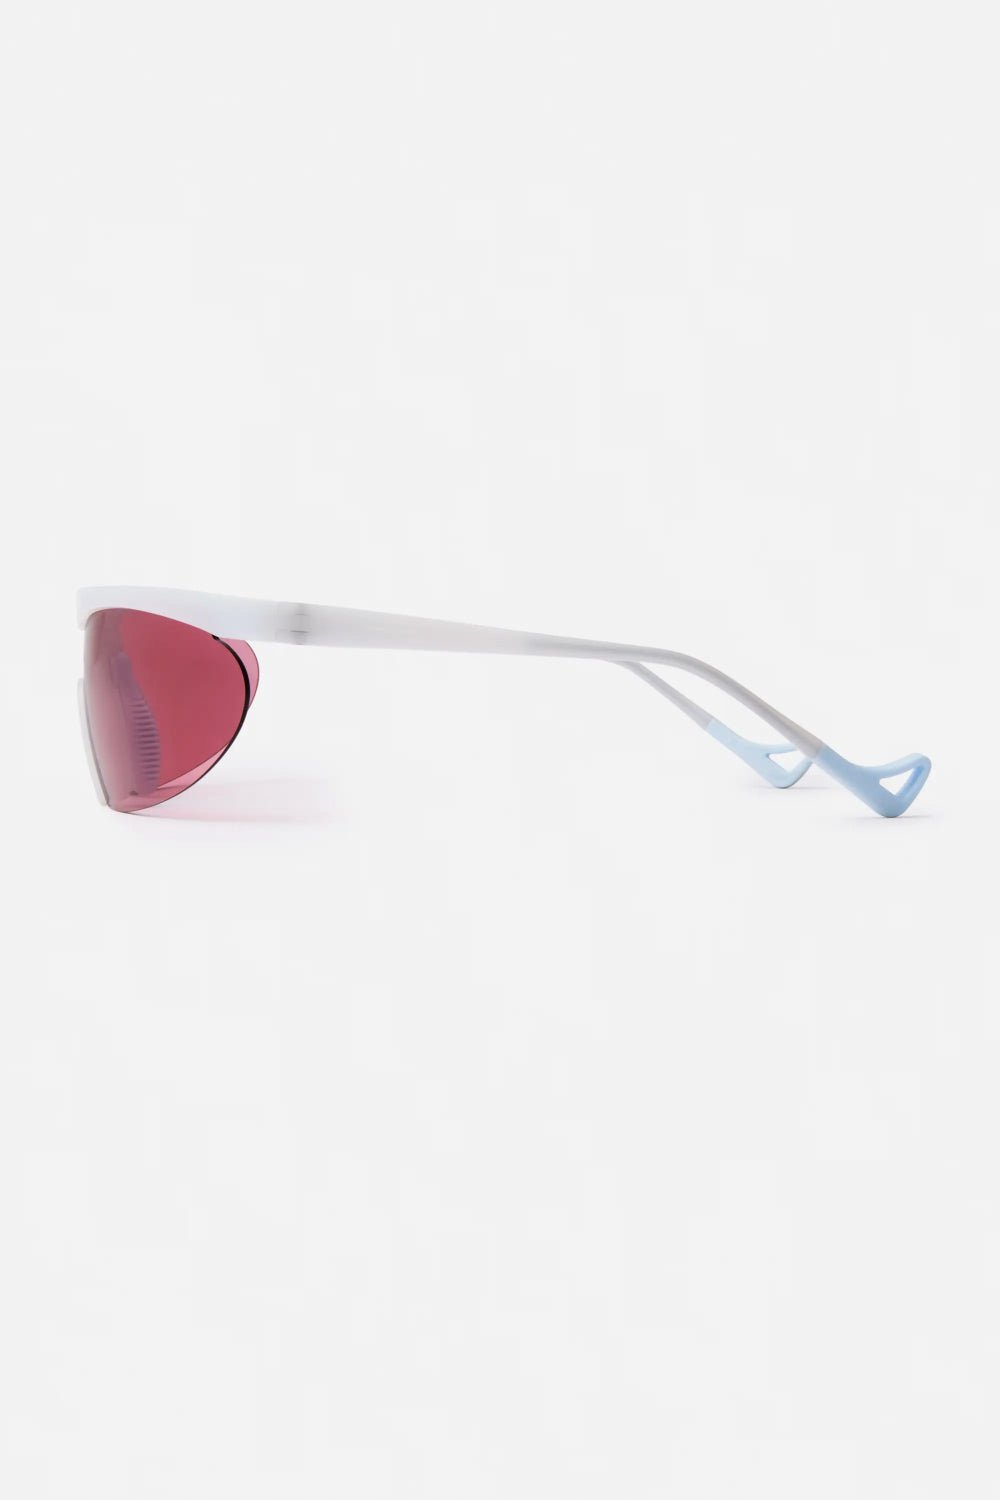 District Vision Koharu Eclipse Sunglasses - Arctic Blue/D+ Black Rose | Coffee Outdoors